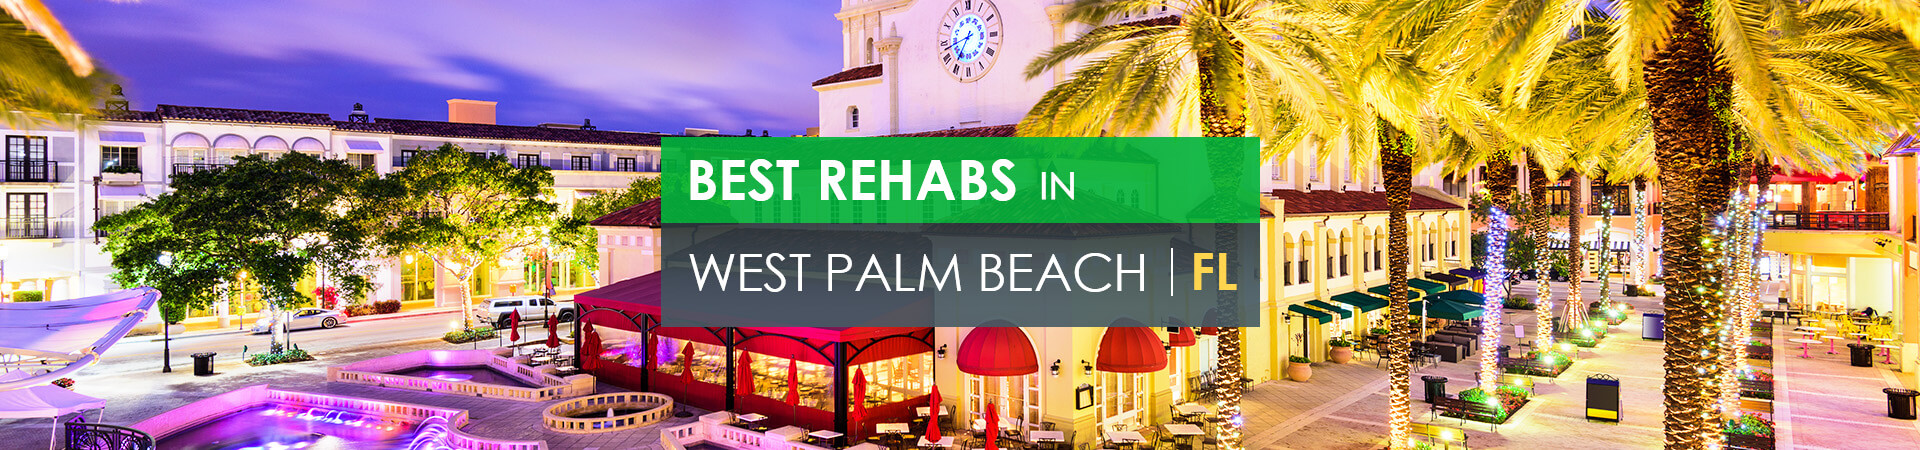 Best rehabs in West Palm Beach, FL